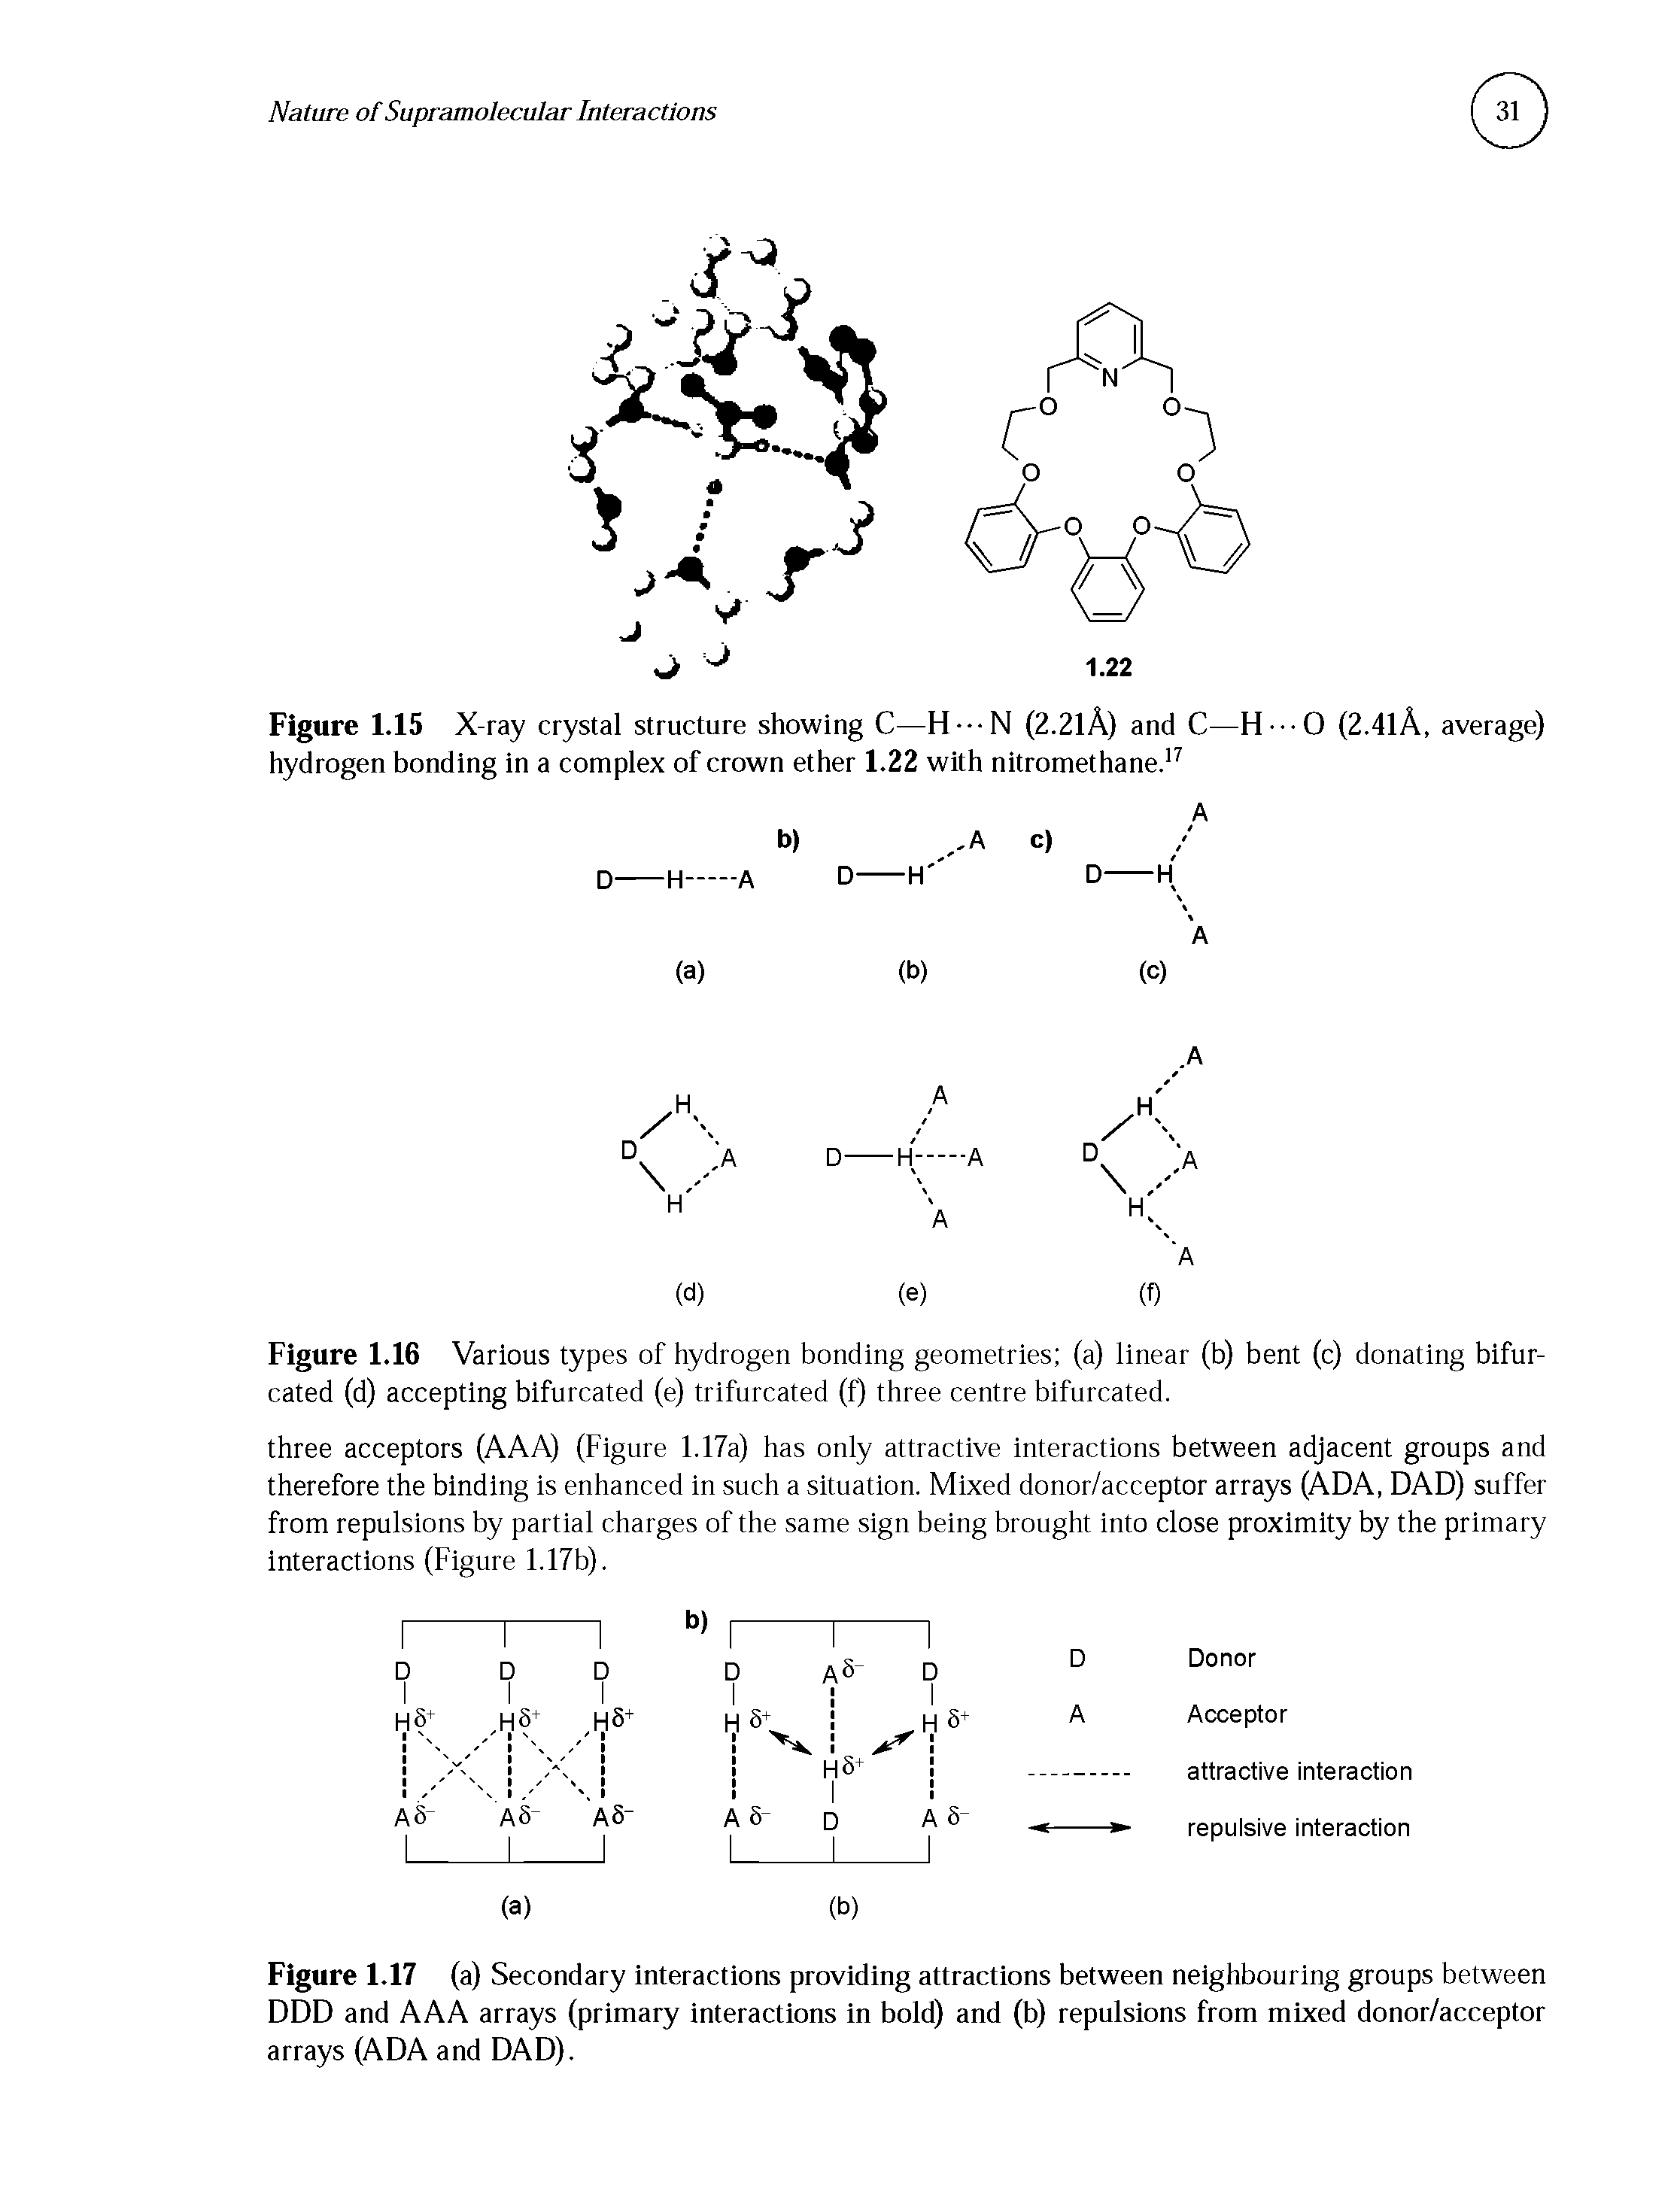 Figure 1.16 Various types of hydrogen bonding geometries (a) linear (b) bent (c) donating bifurcated (d) accepting bifurcated (e) trifurcated (f) three centre bifurcated.